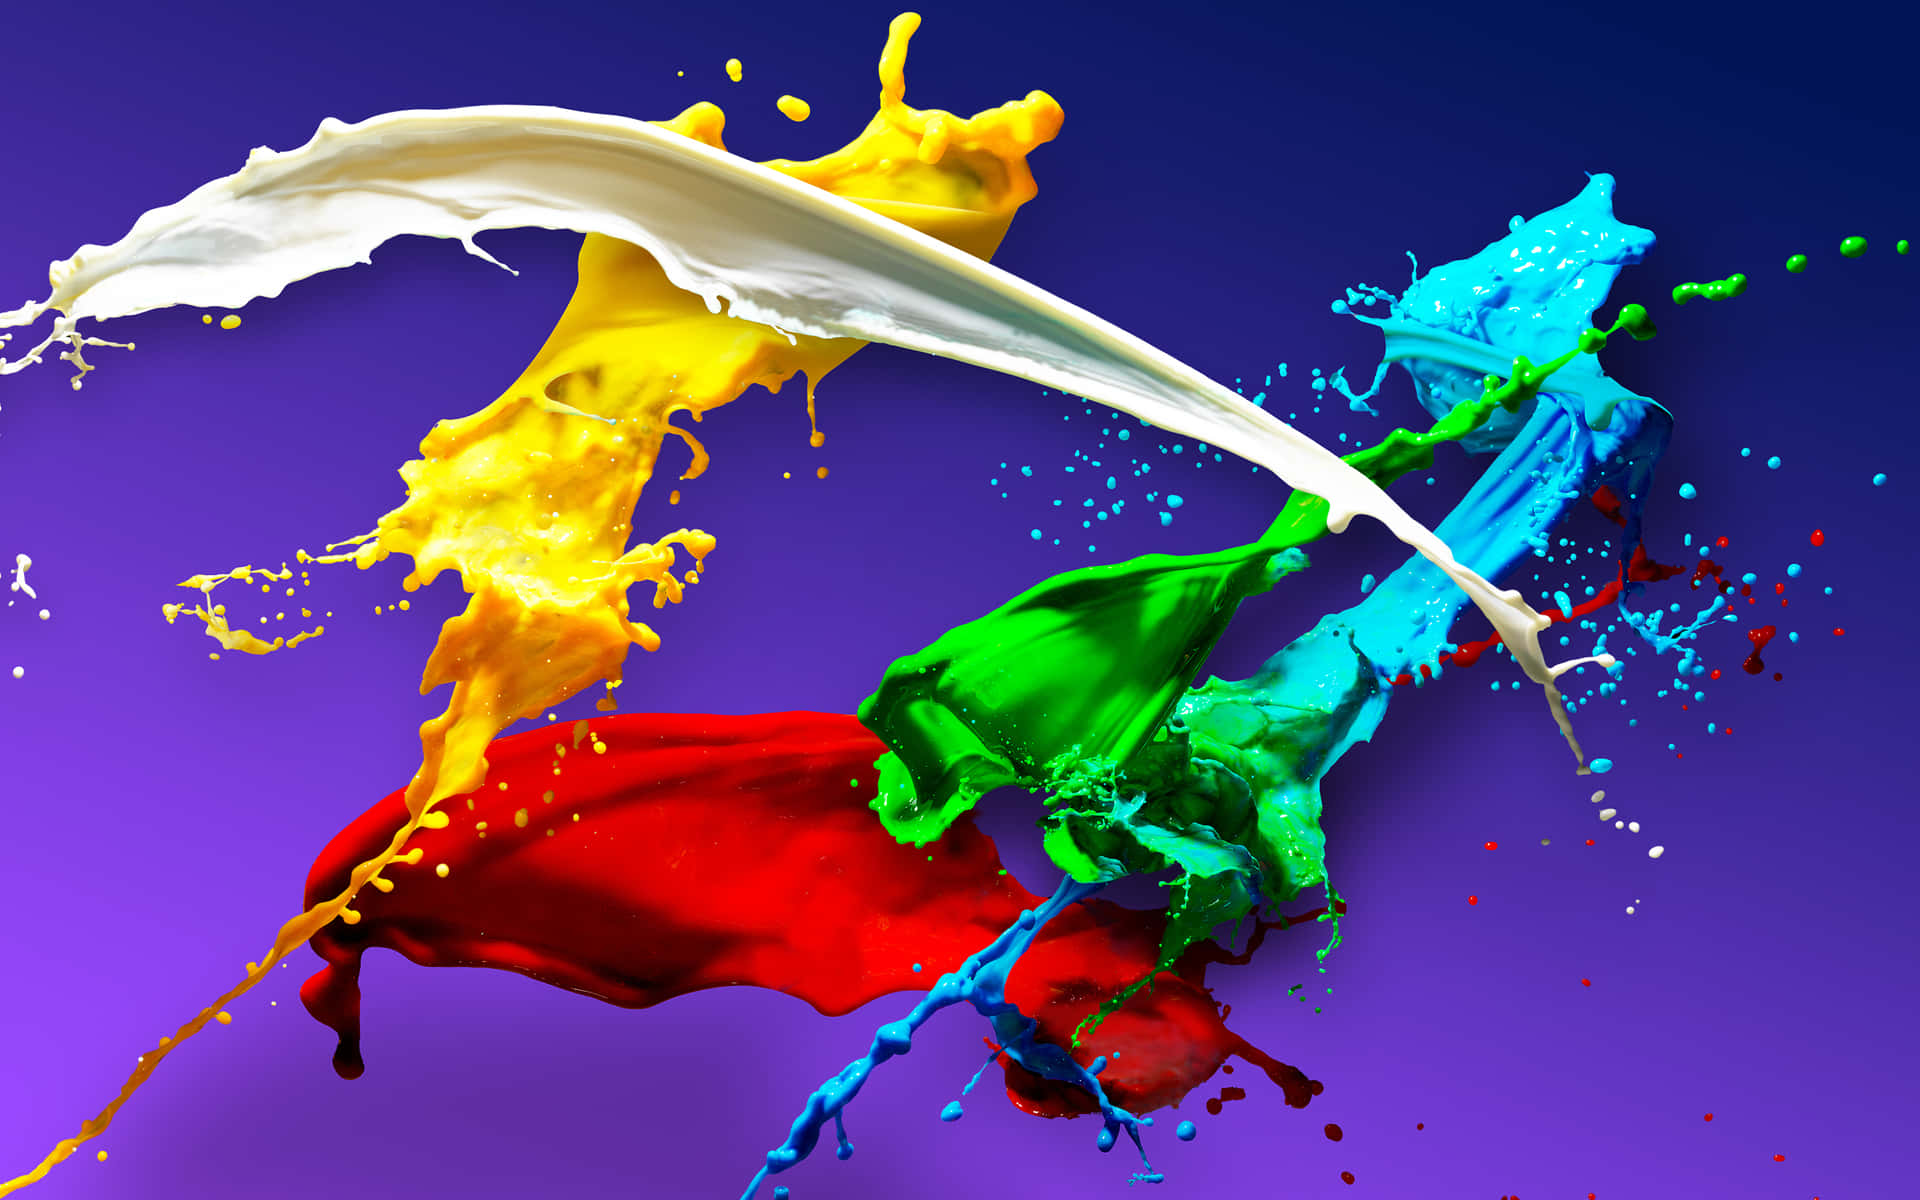 A Colorful Splash Of Paint